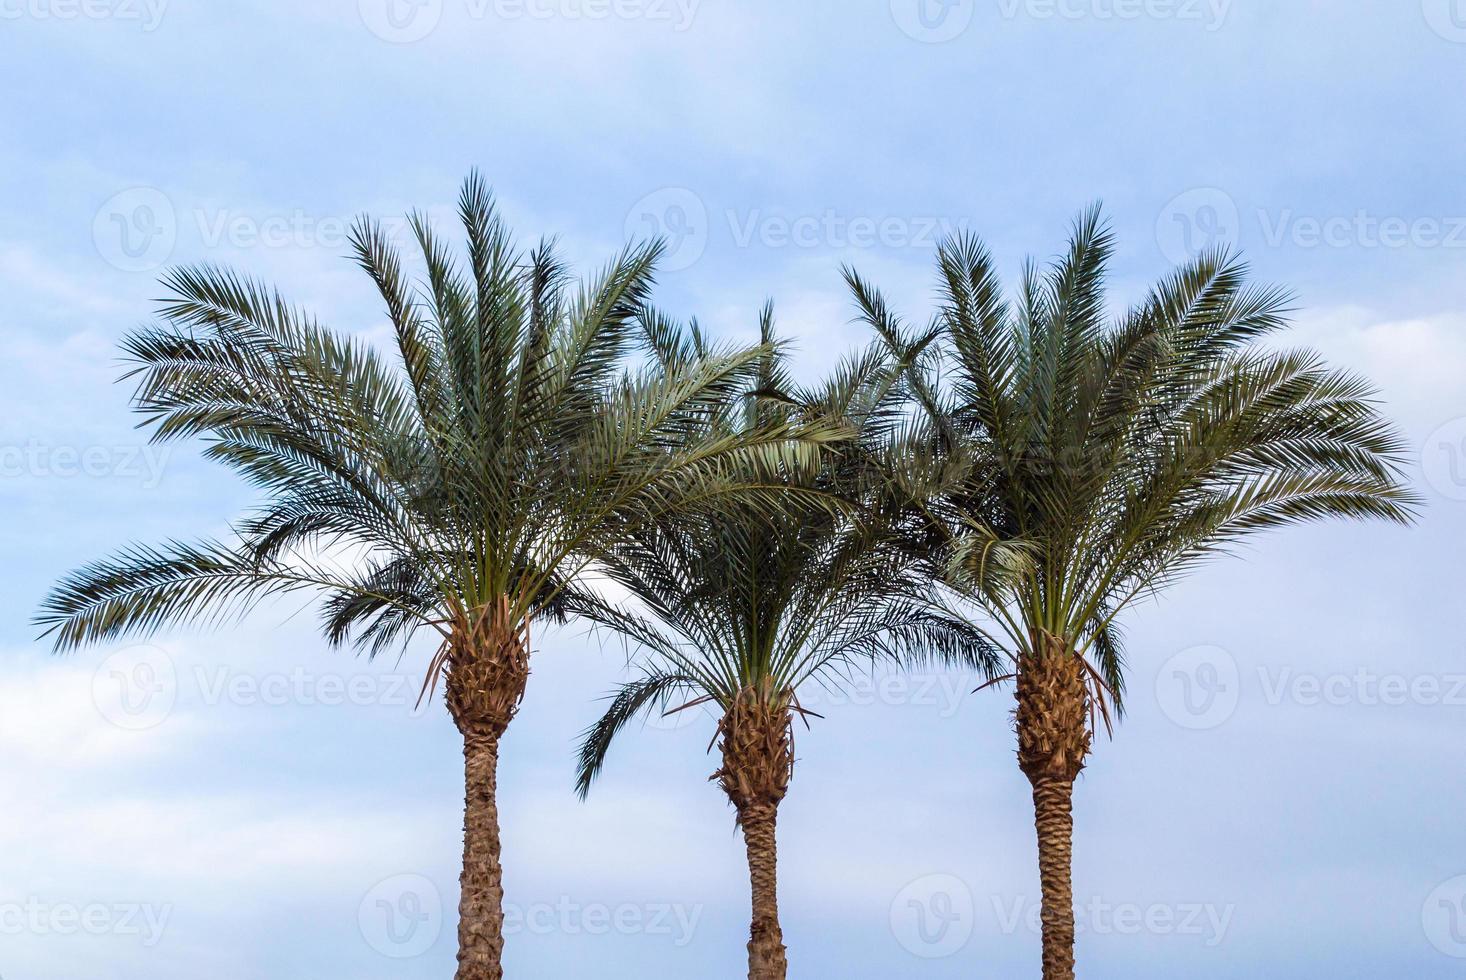 drie groene palmbomen tegen een blauwe hemel foto